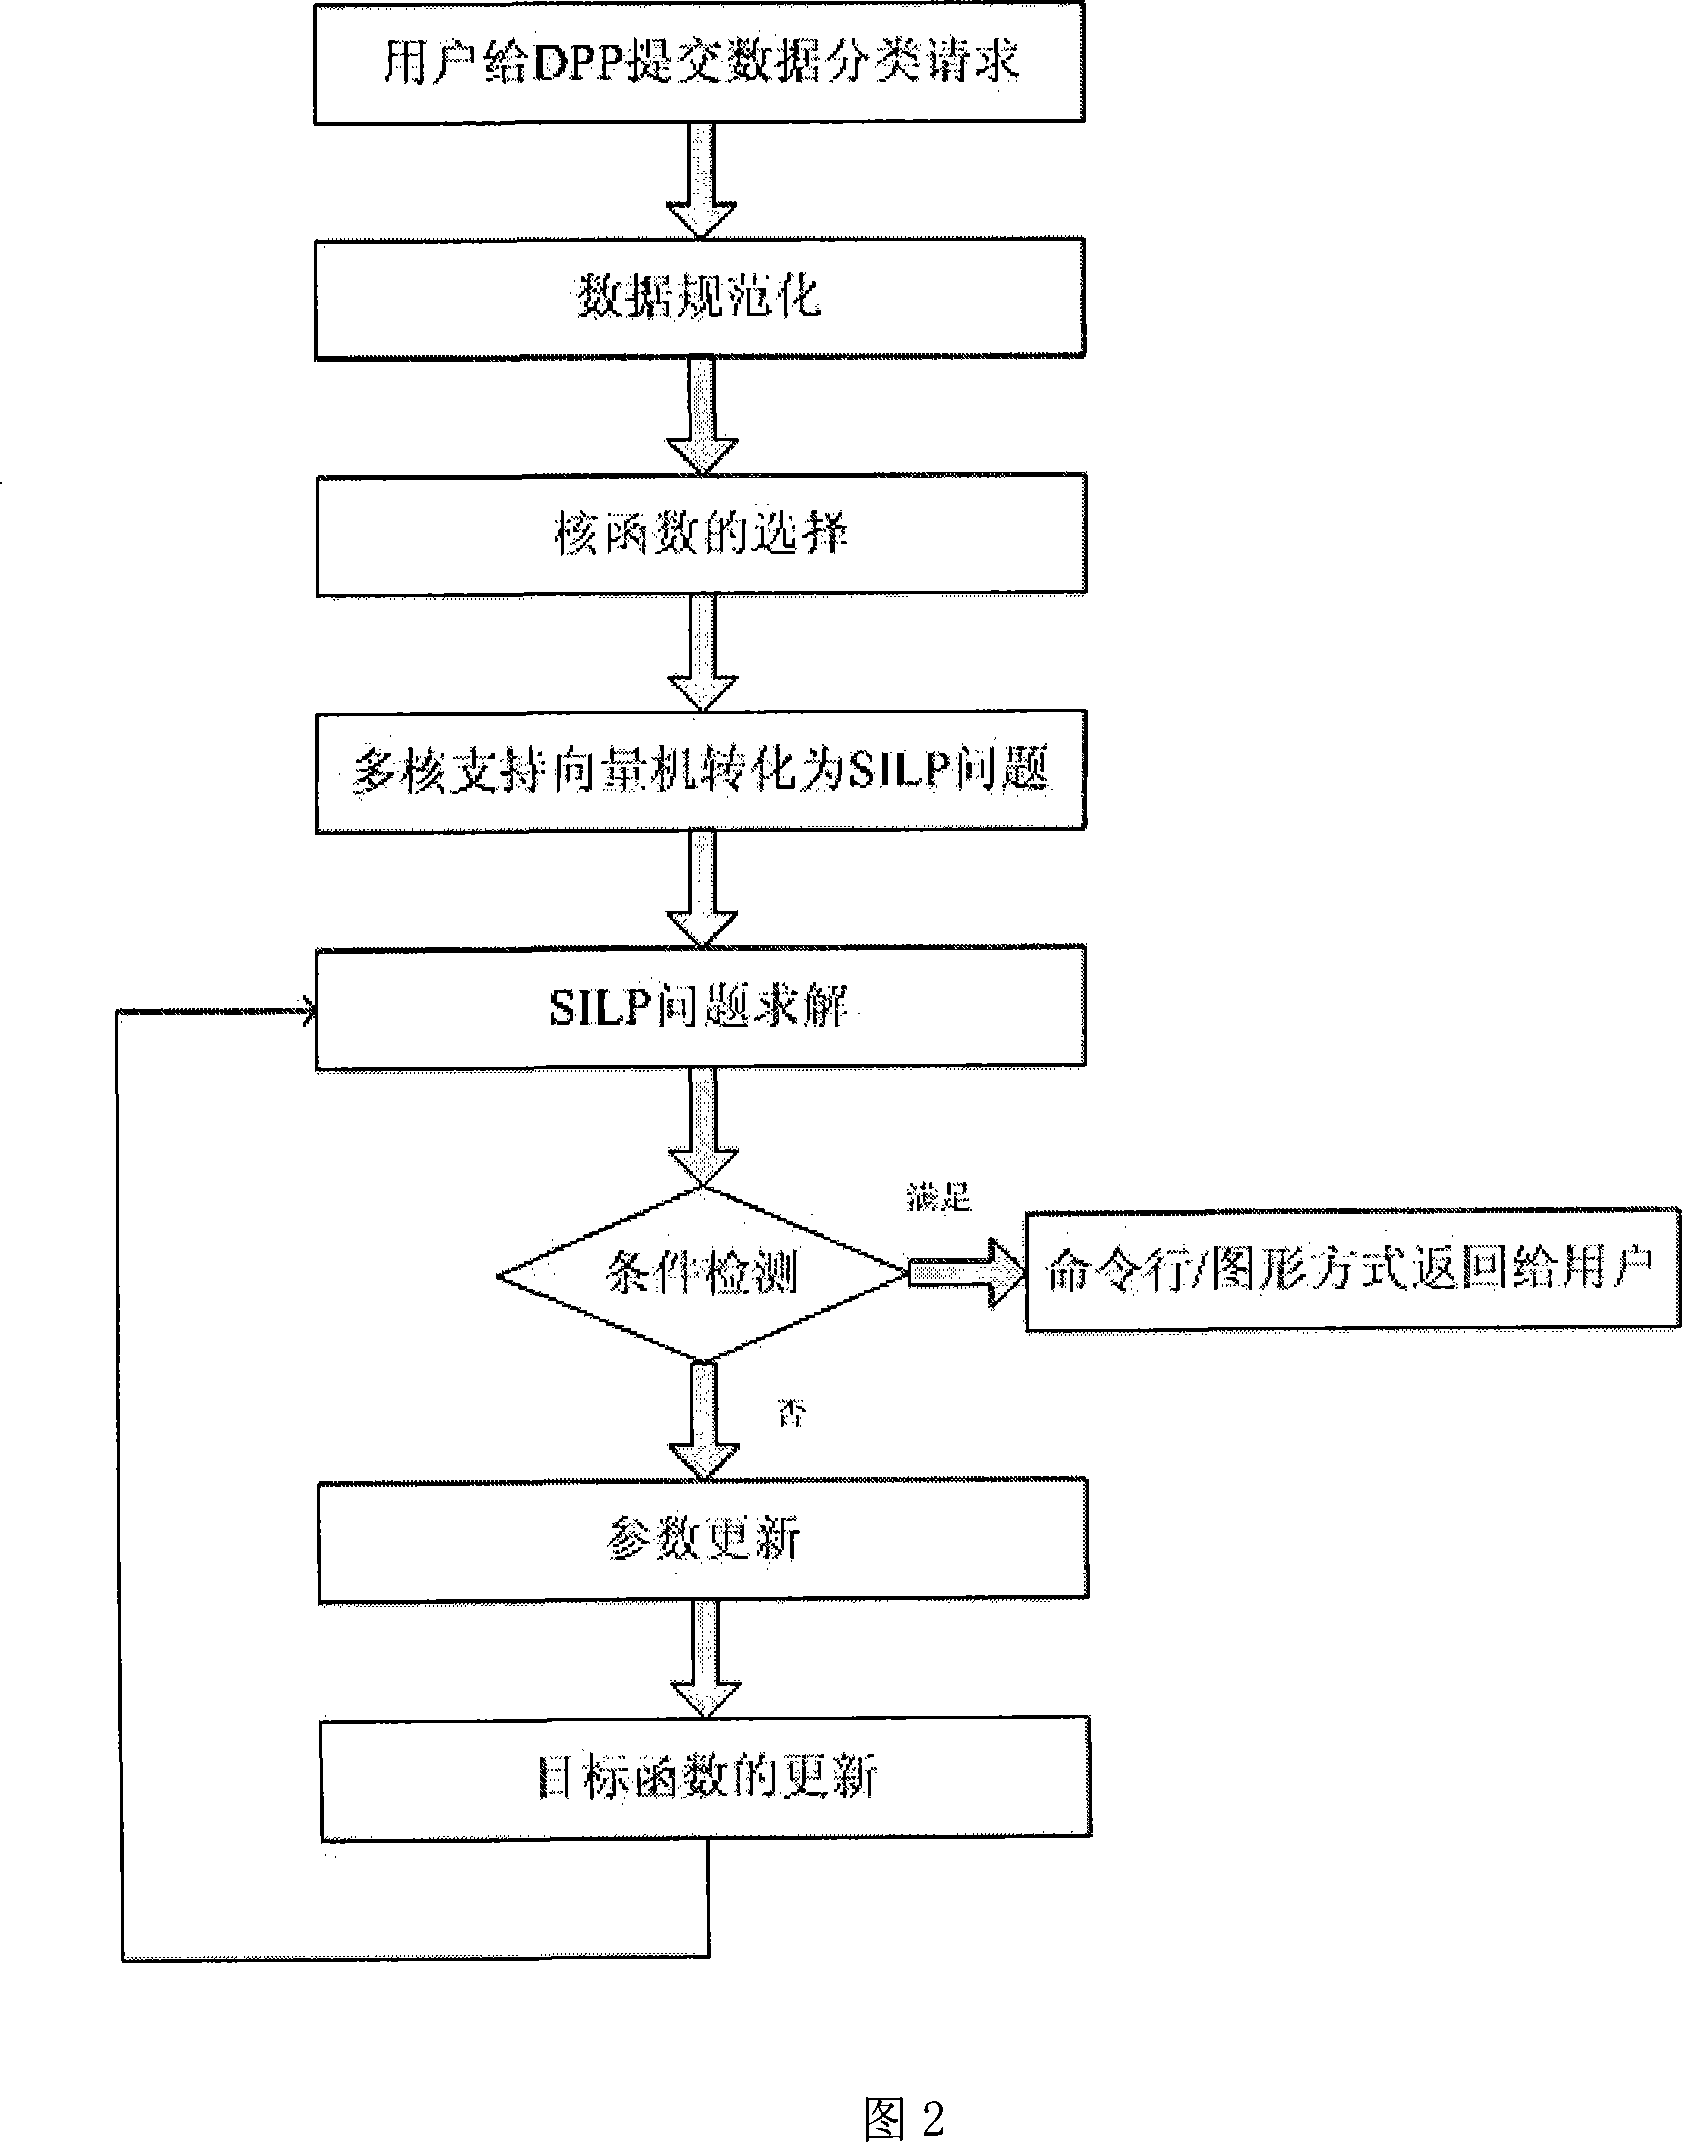 Multi-kernel support vector machine classification method